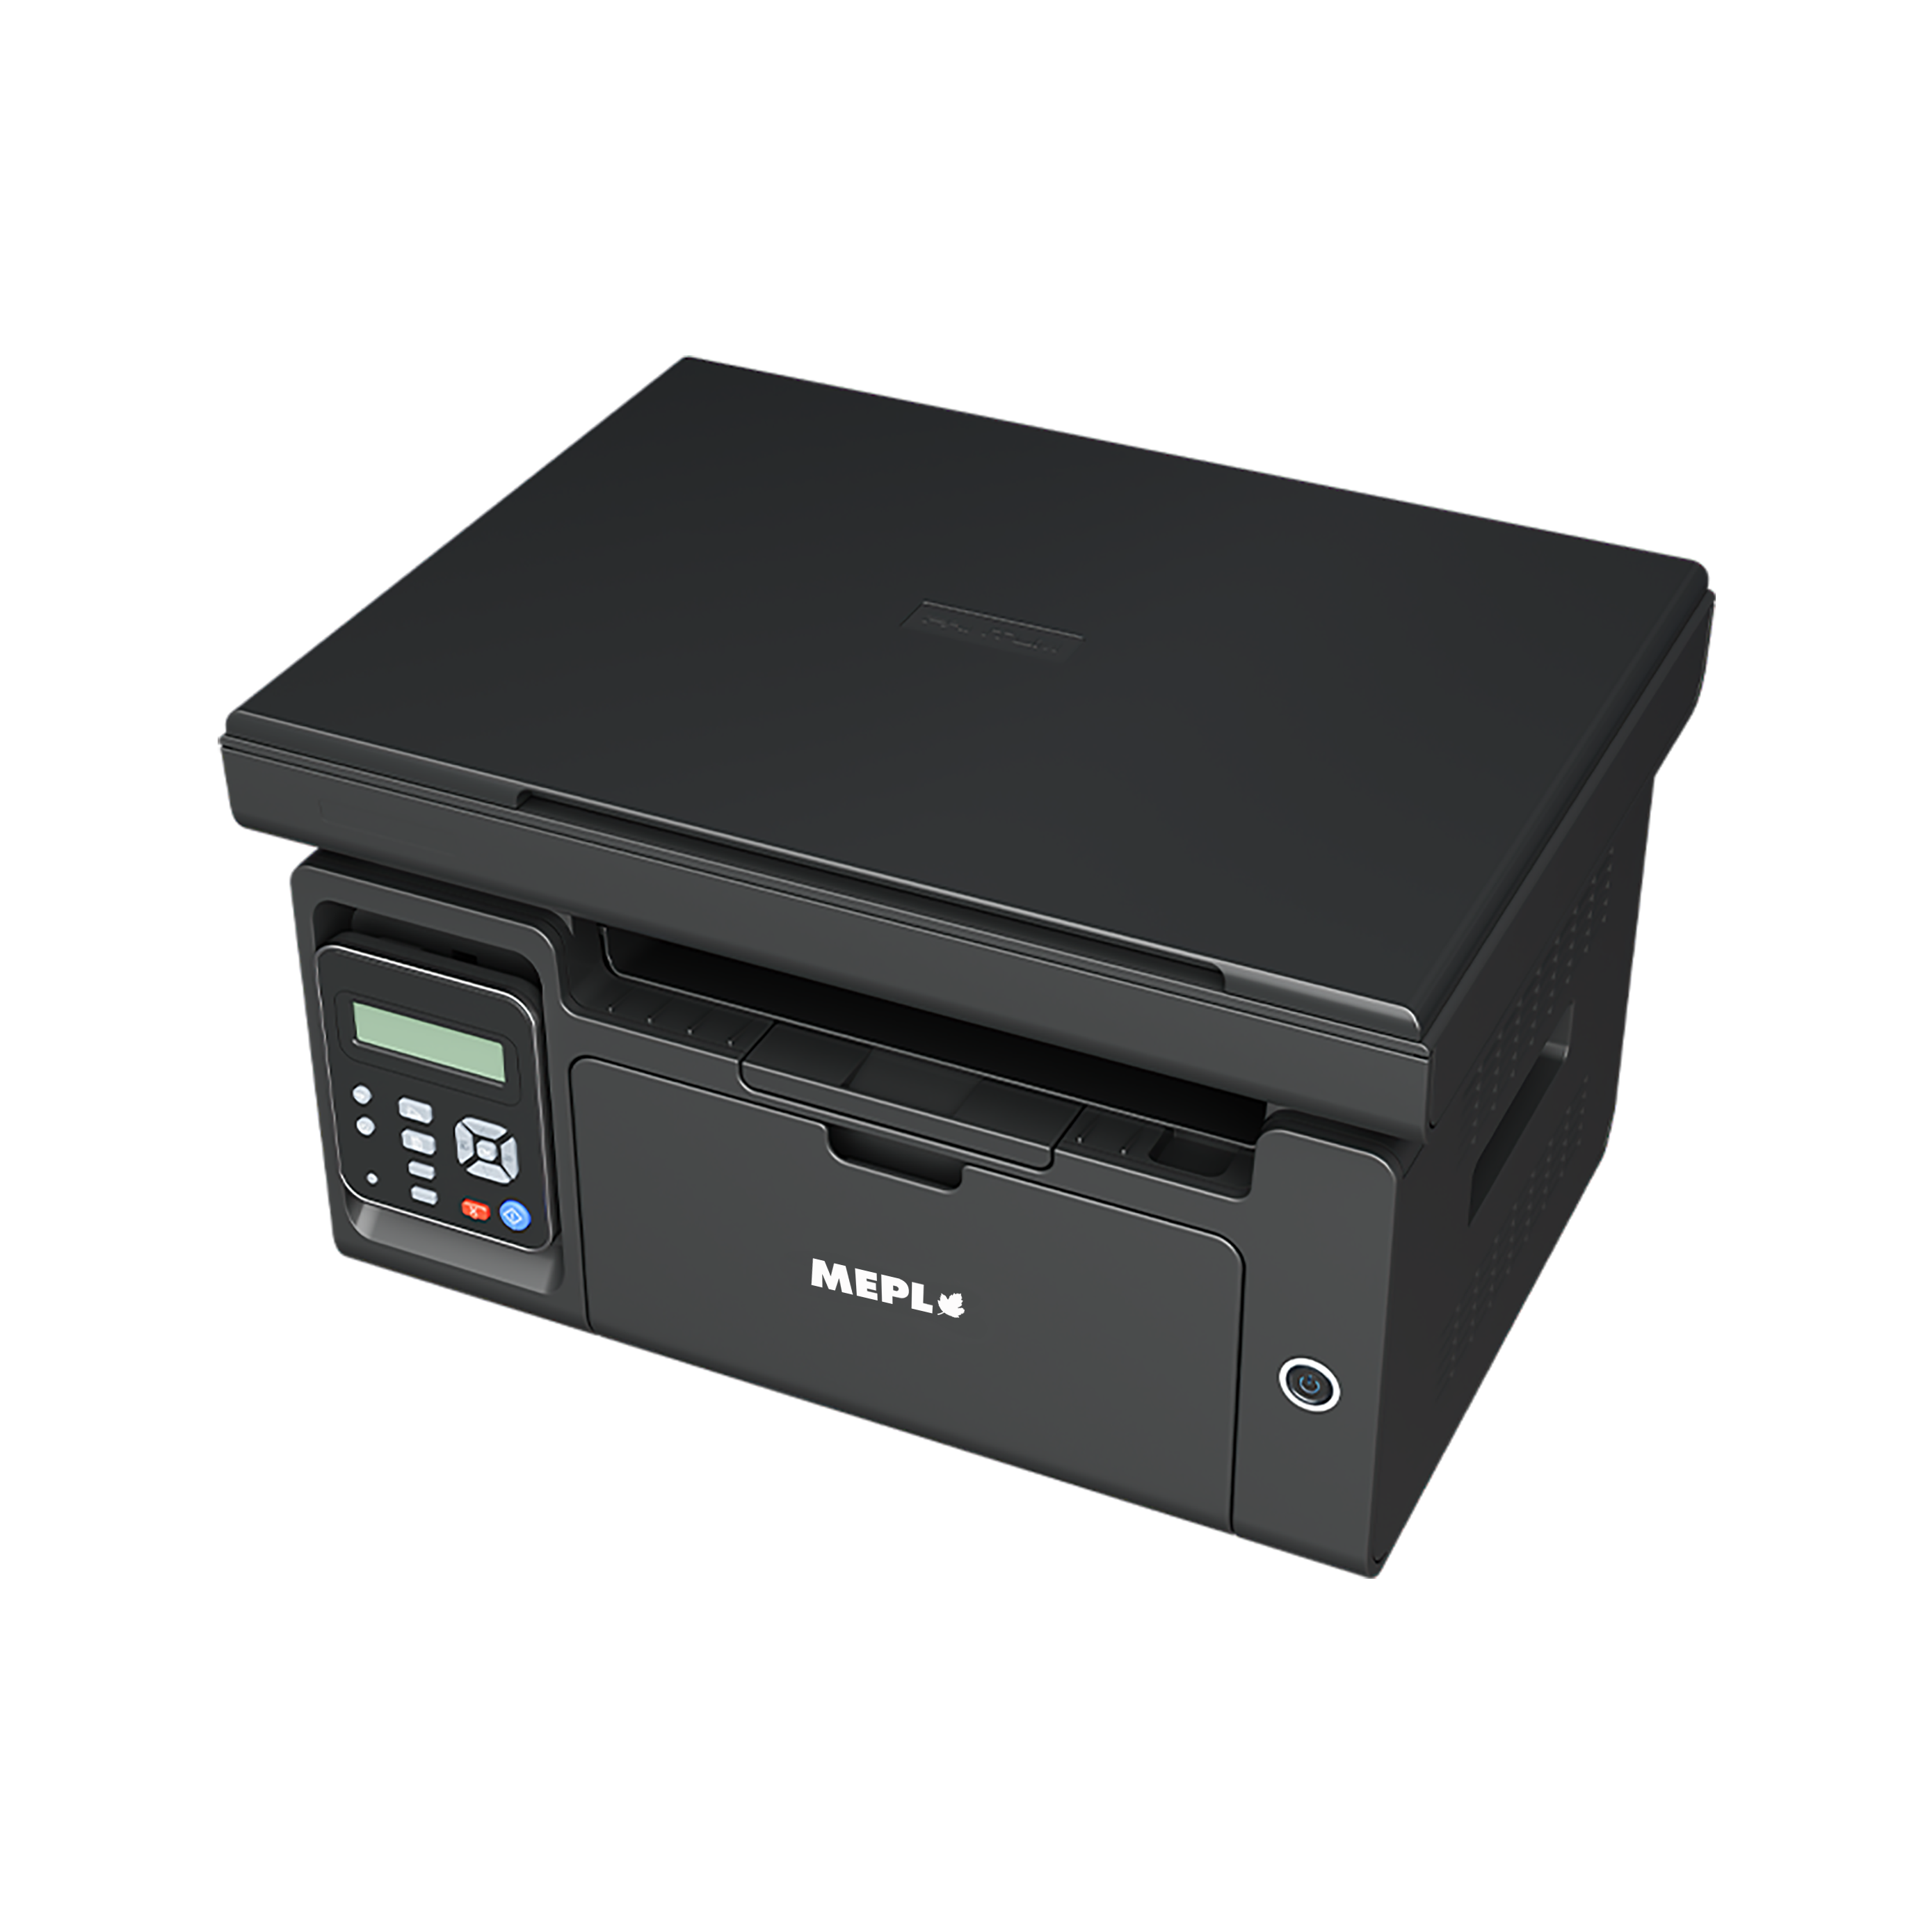 MEPL Multifunction Printer MM6503